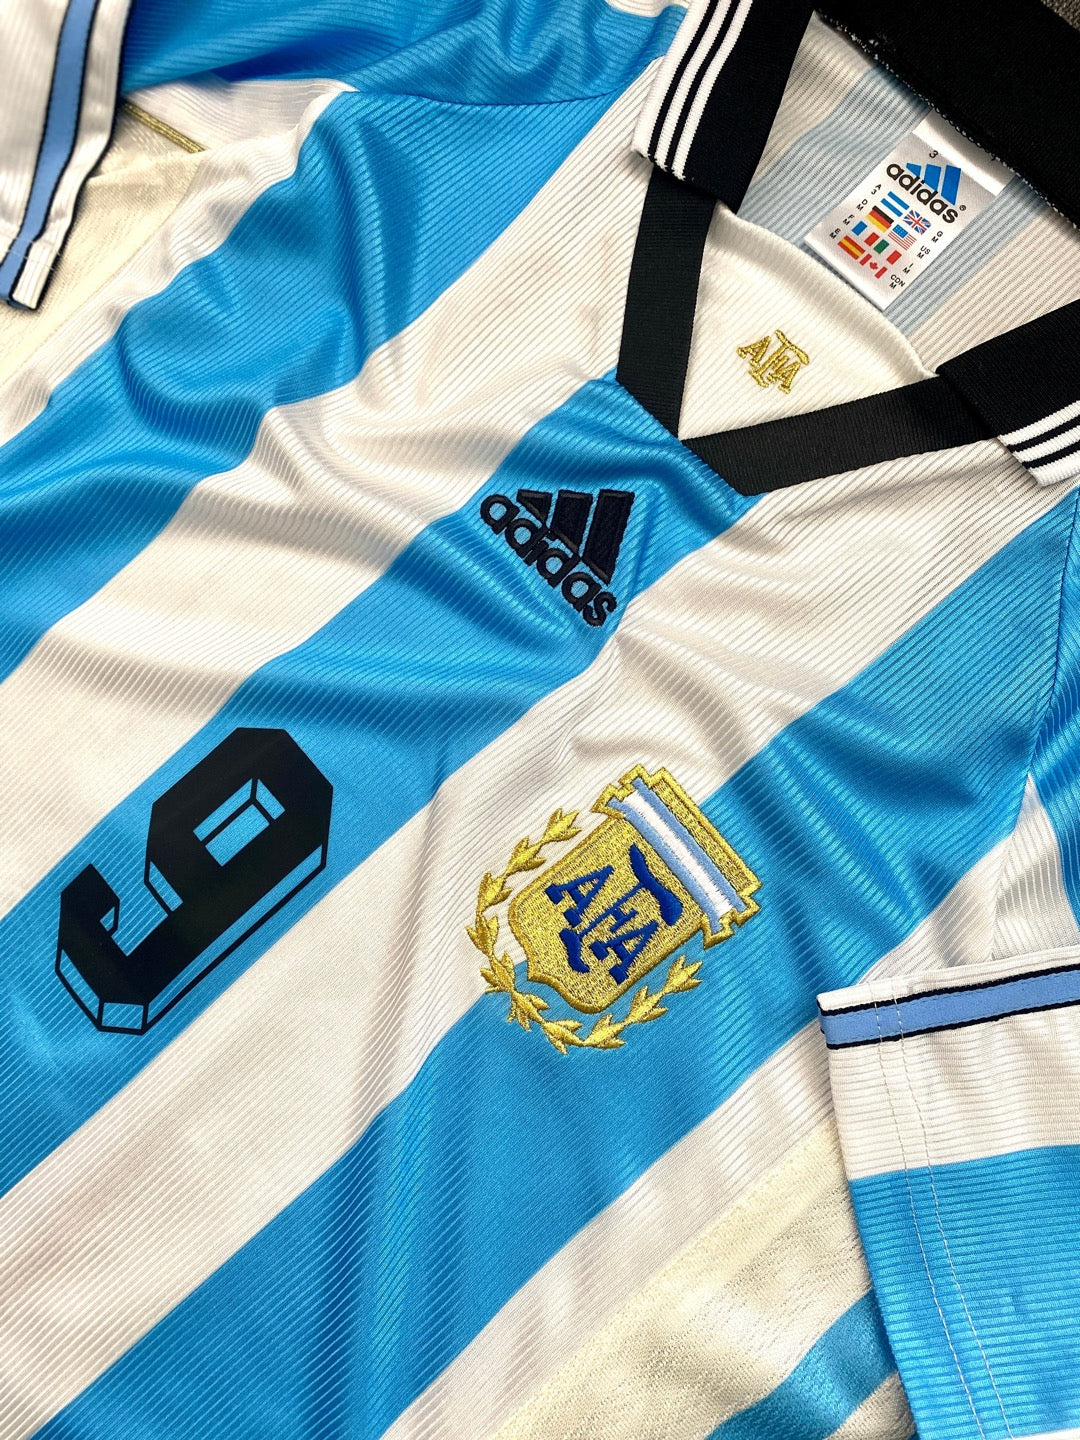 jersey argentina 1998 local dorsal detalle